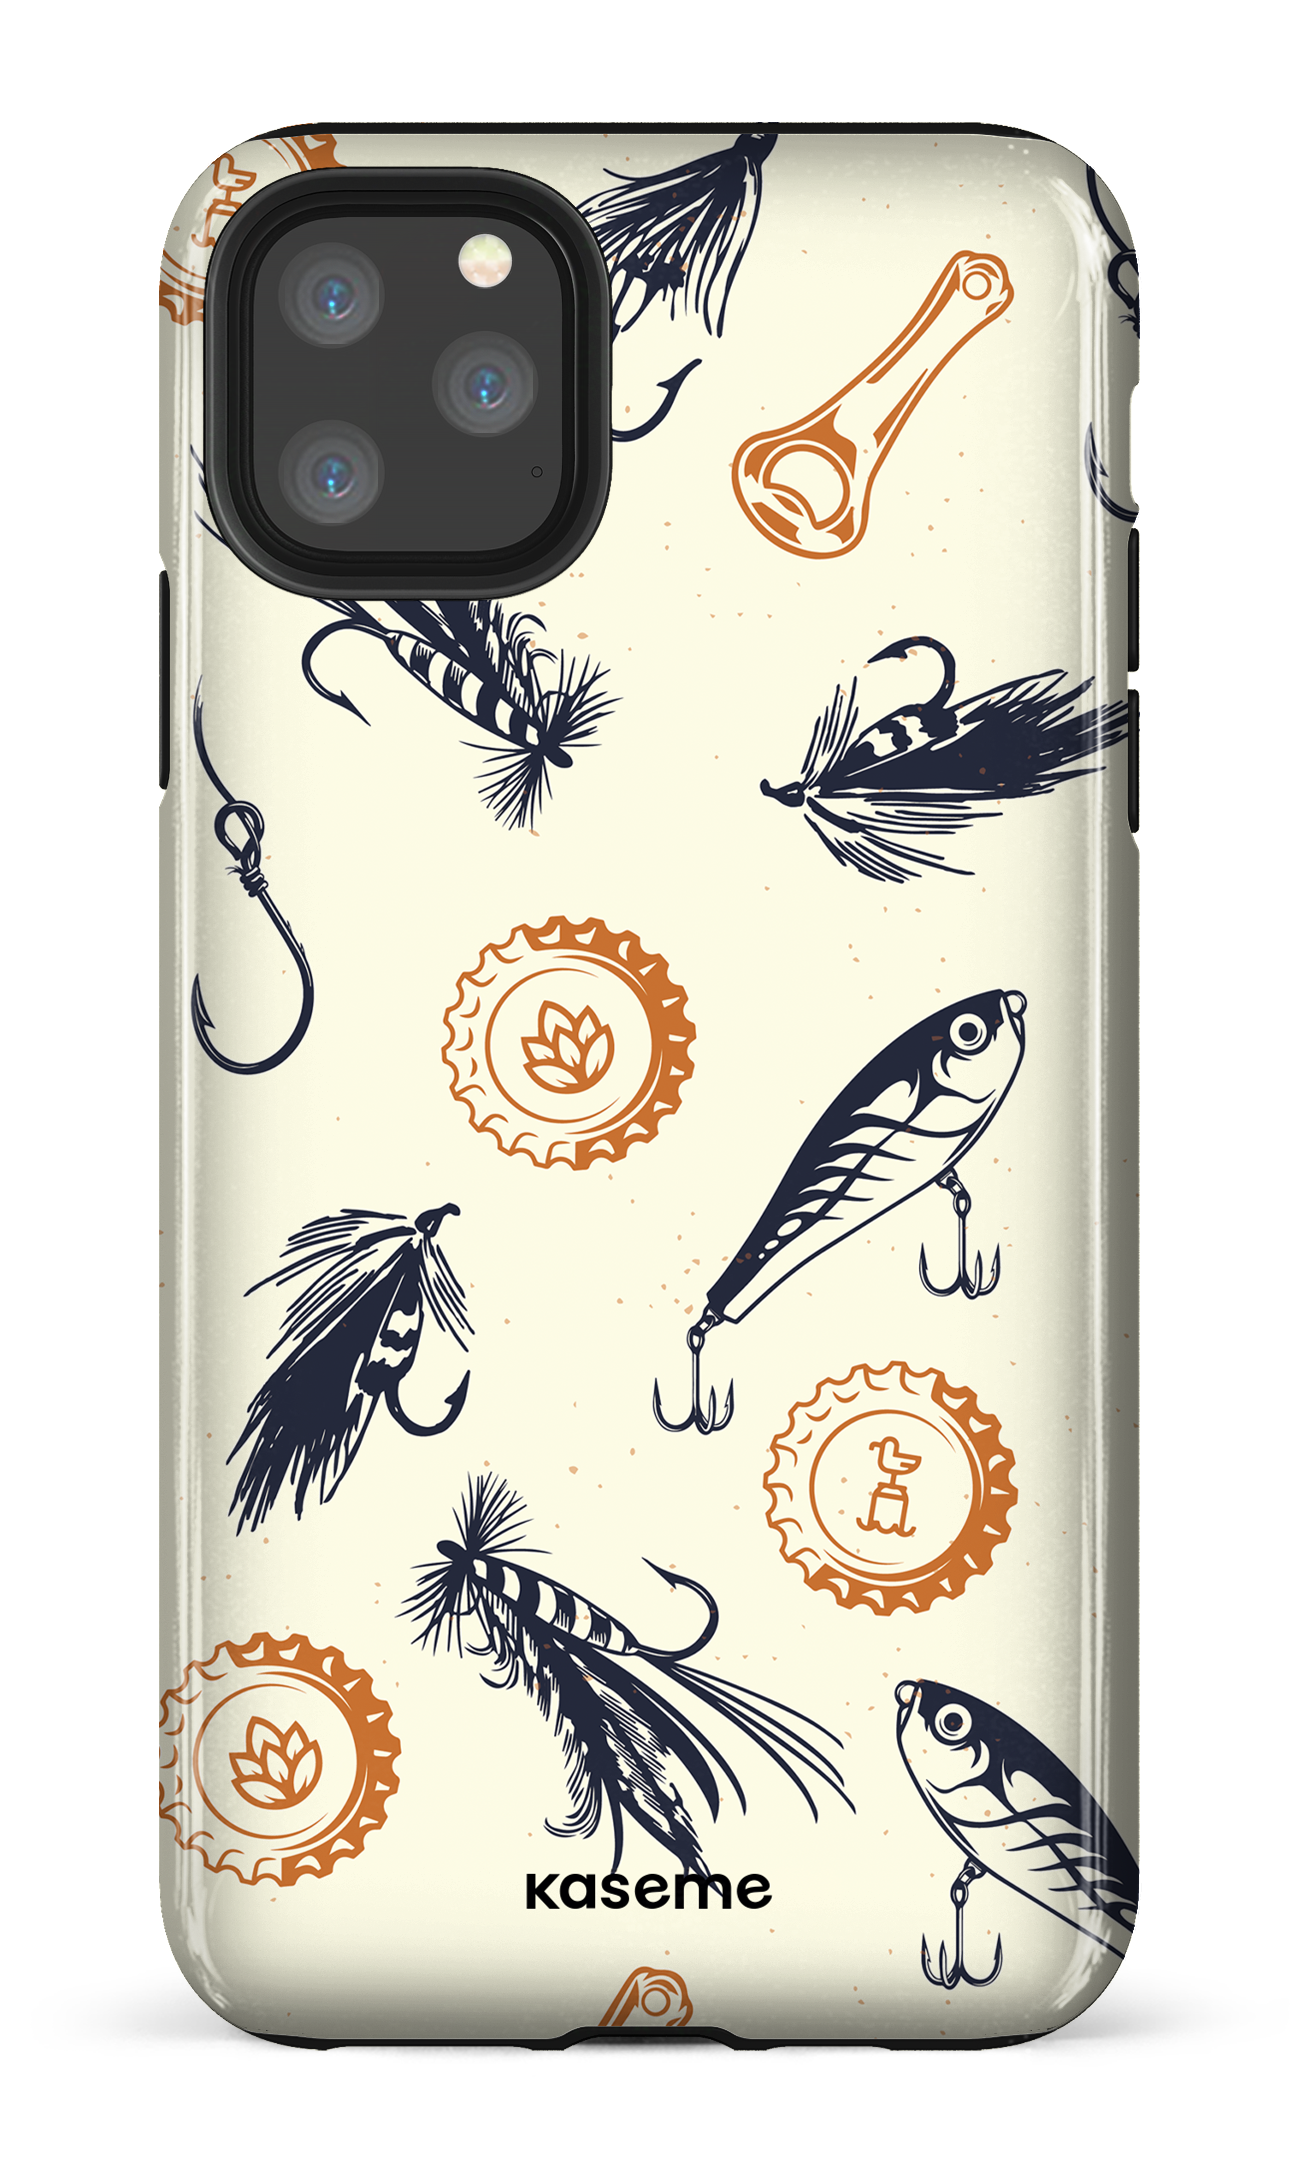 Fishy - iPhone 11 Pro Max